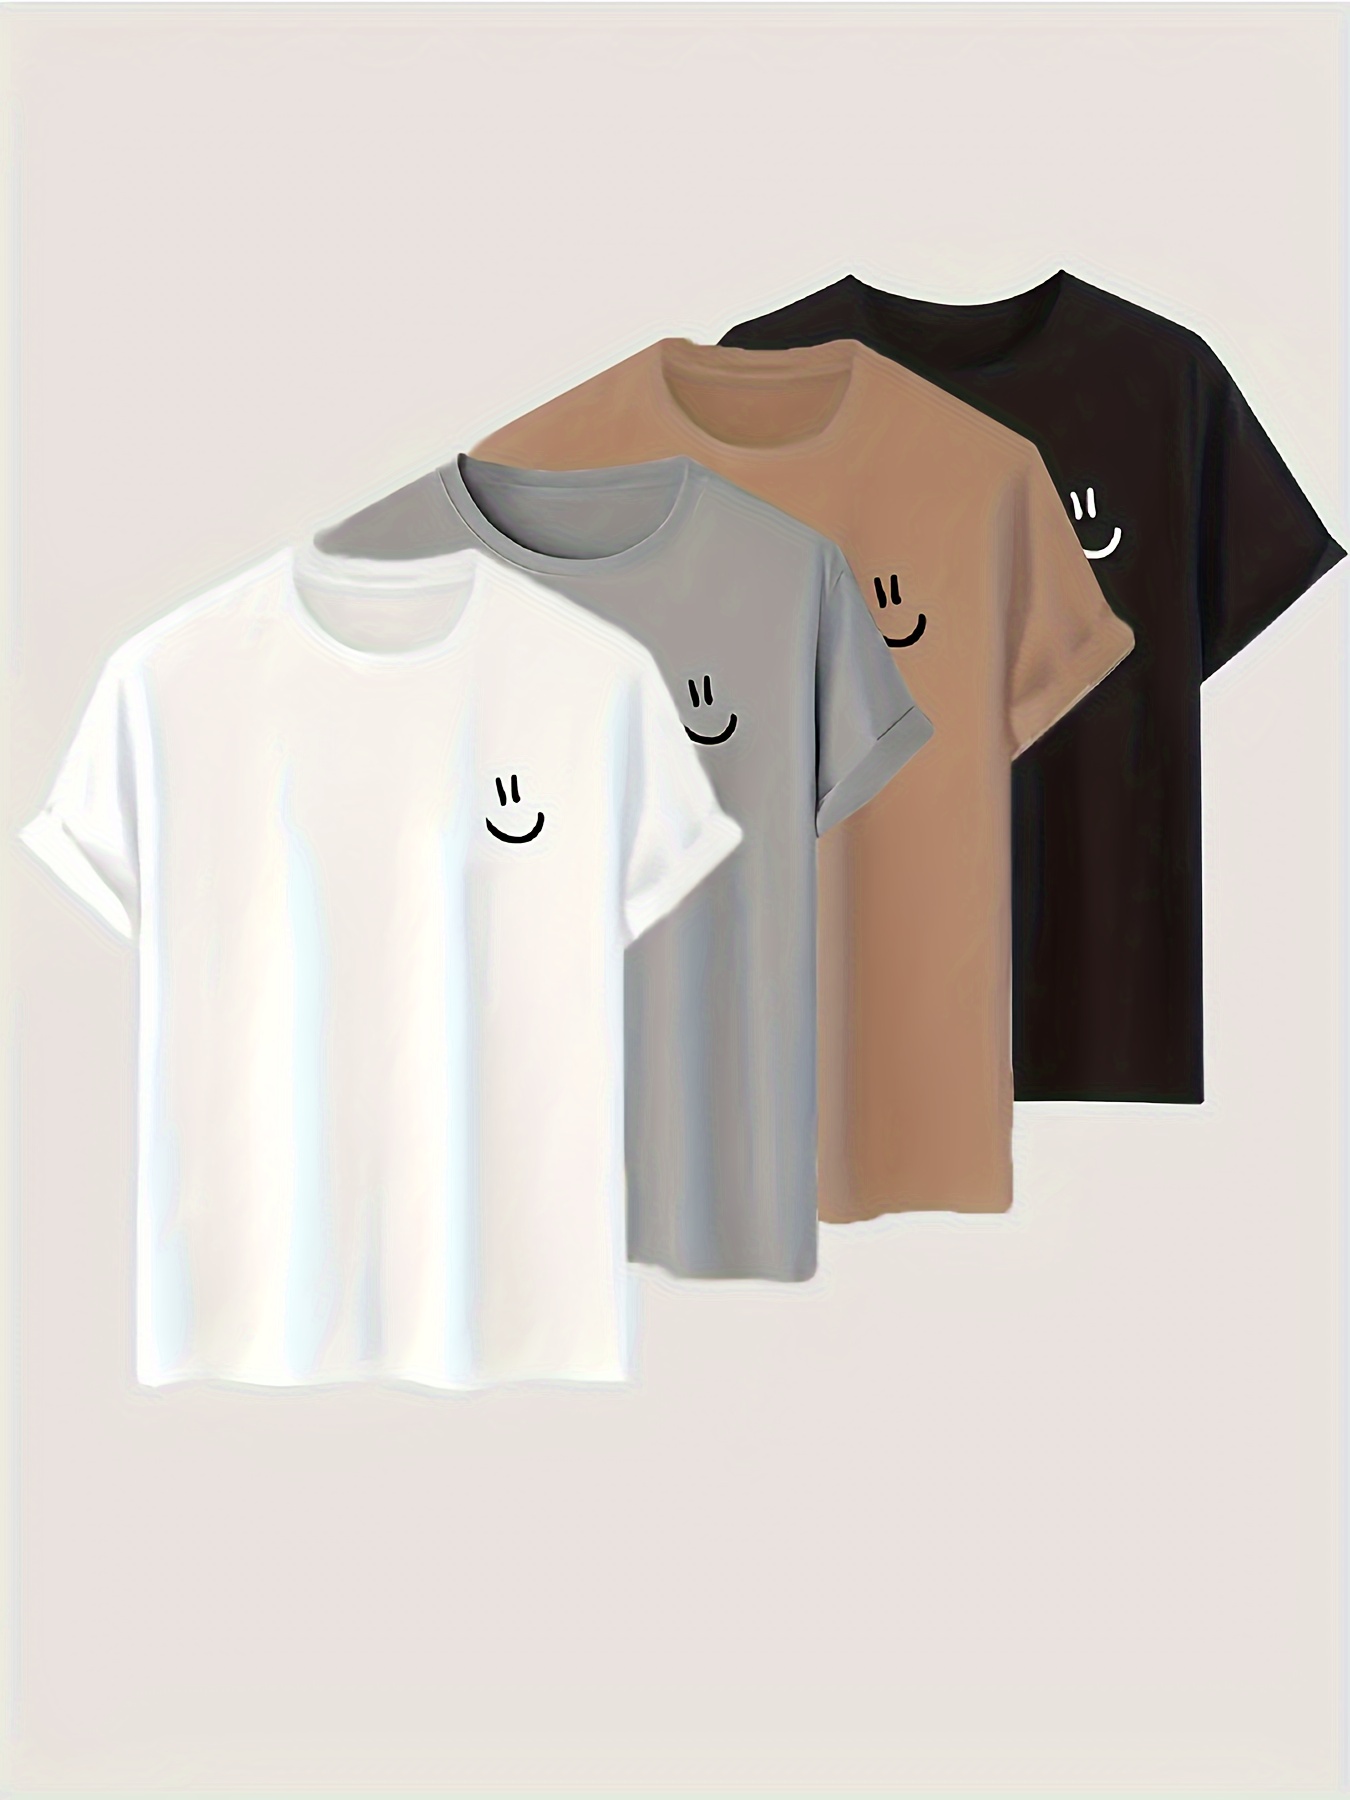 Fashion 4pcs Men's Fashion Printed T-shirt Short Sleeve